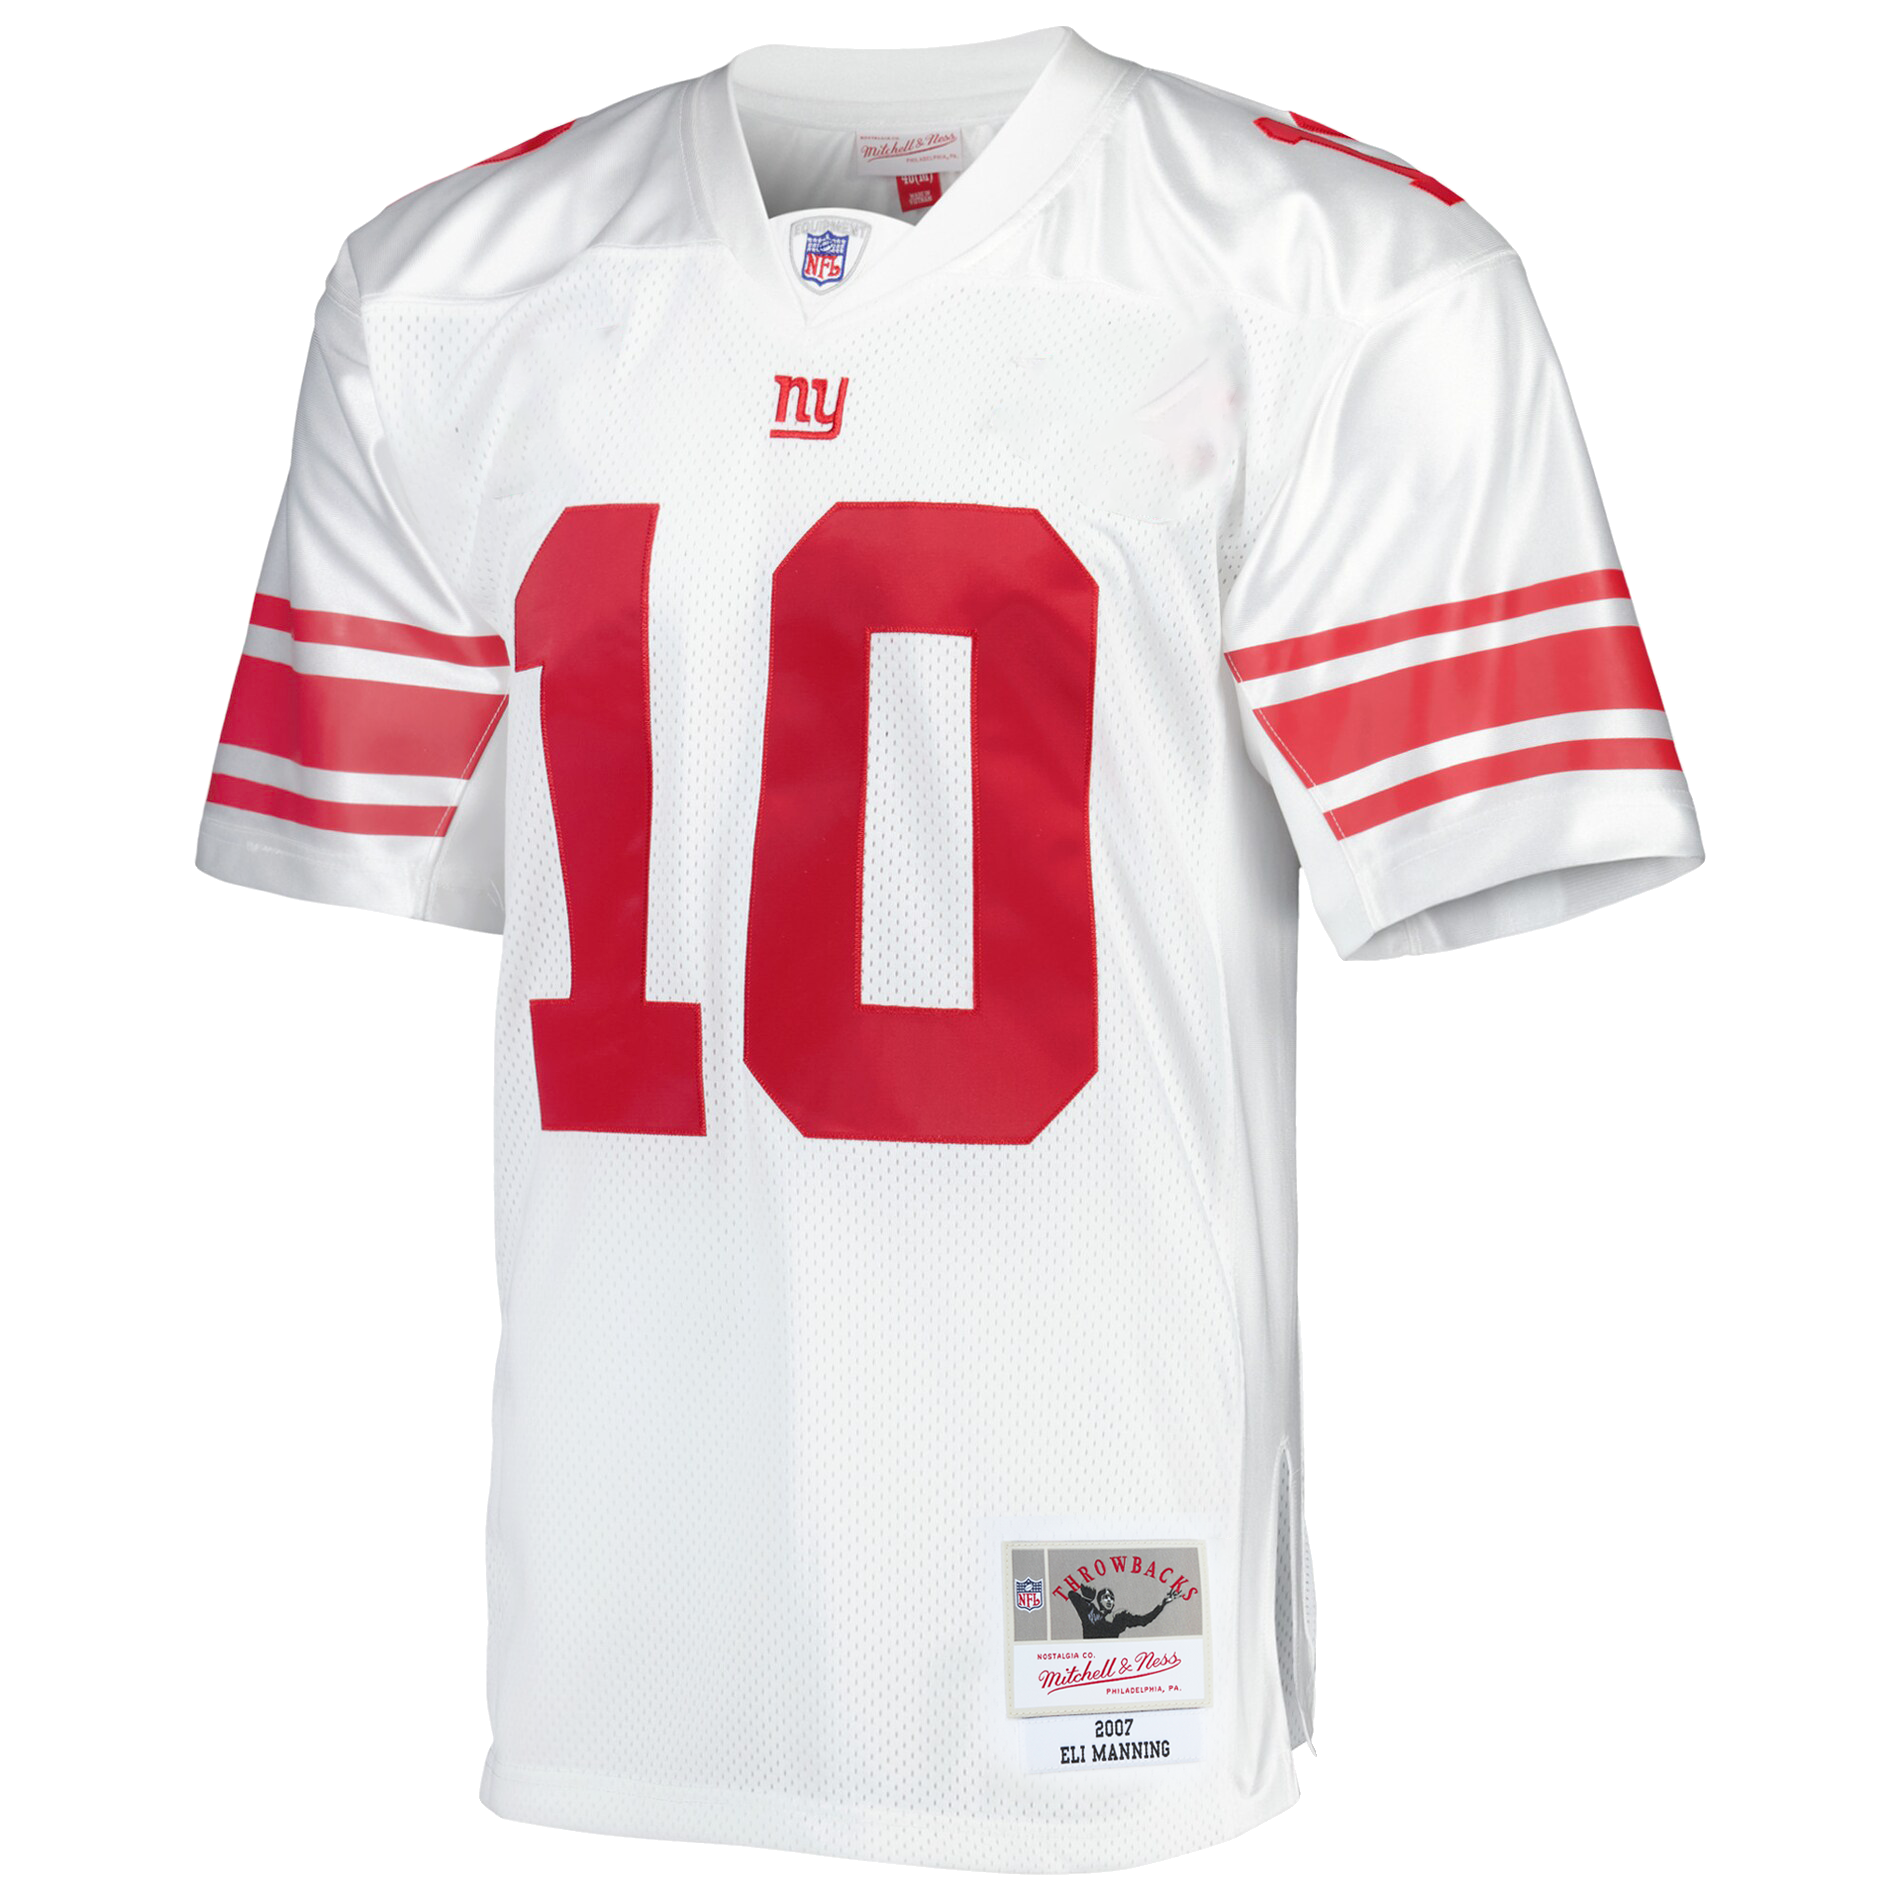 Eli Manning New York Giants Mitchell & Ness NFL 07 Legacy Jersey - White